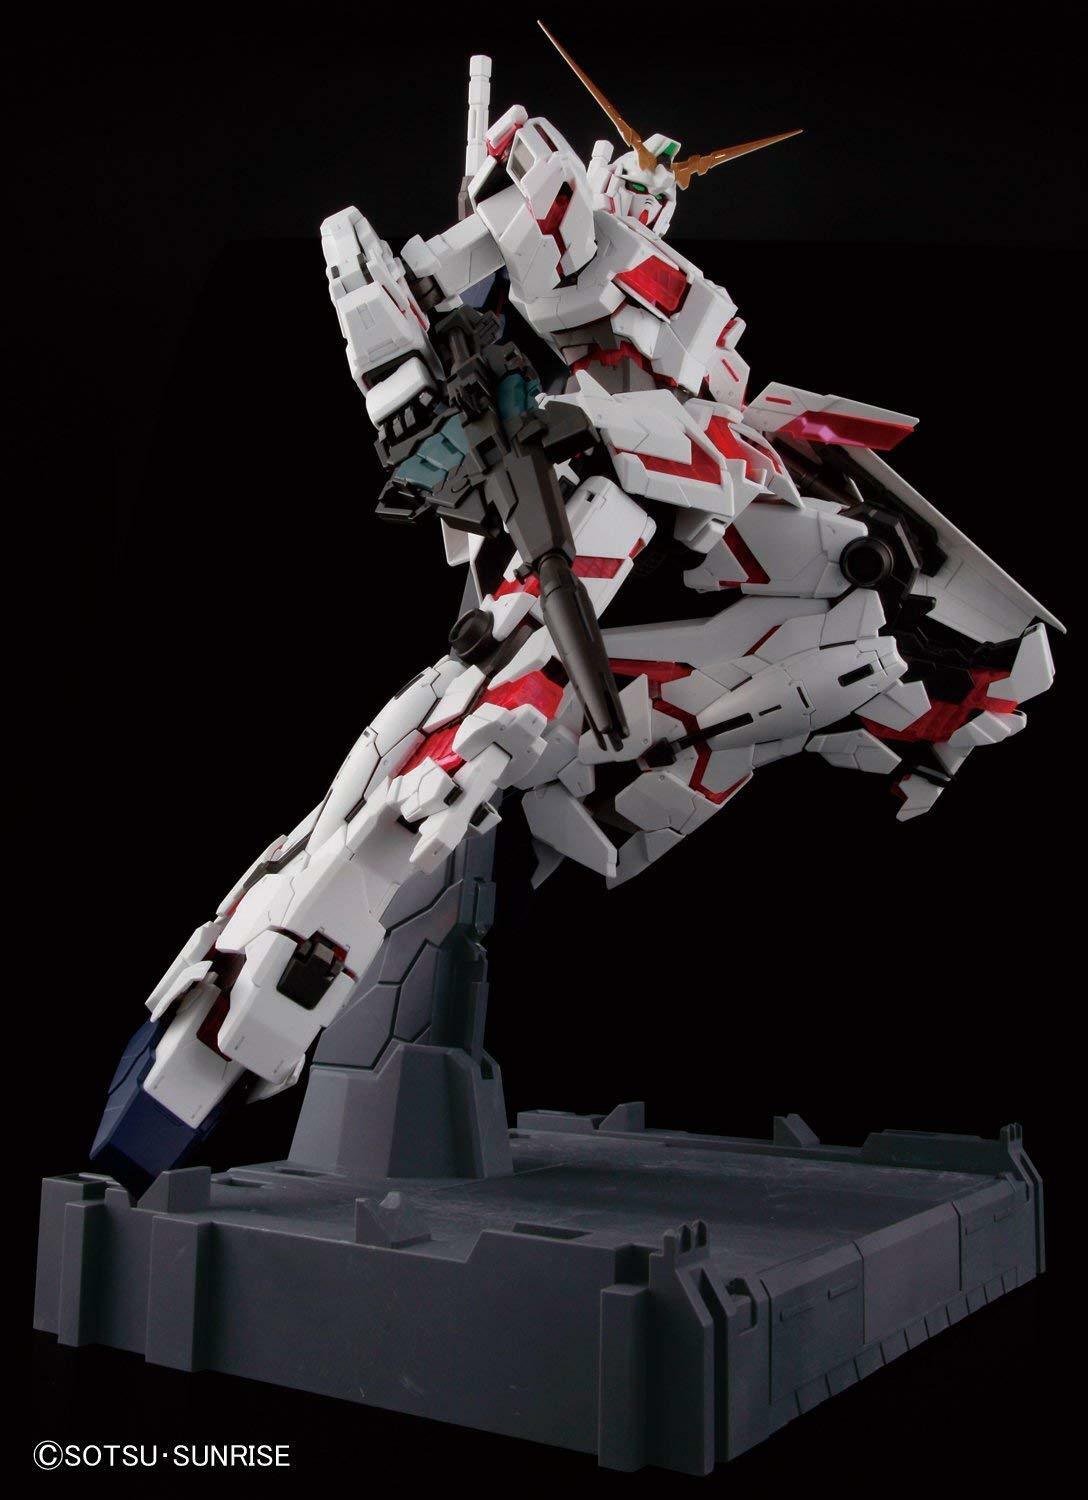 PG Unicorn Gundam Full Psycho-Frame Prototype Mobile Suite 1/60